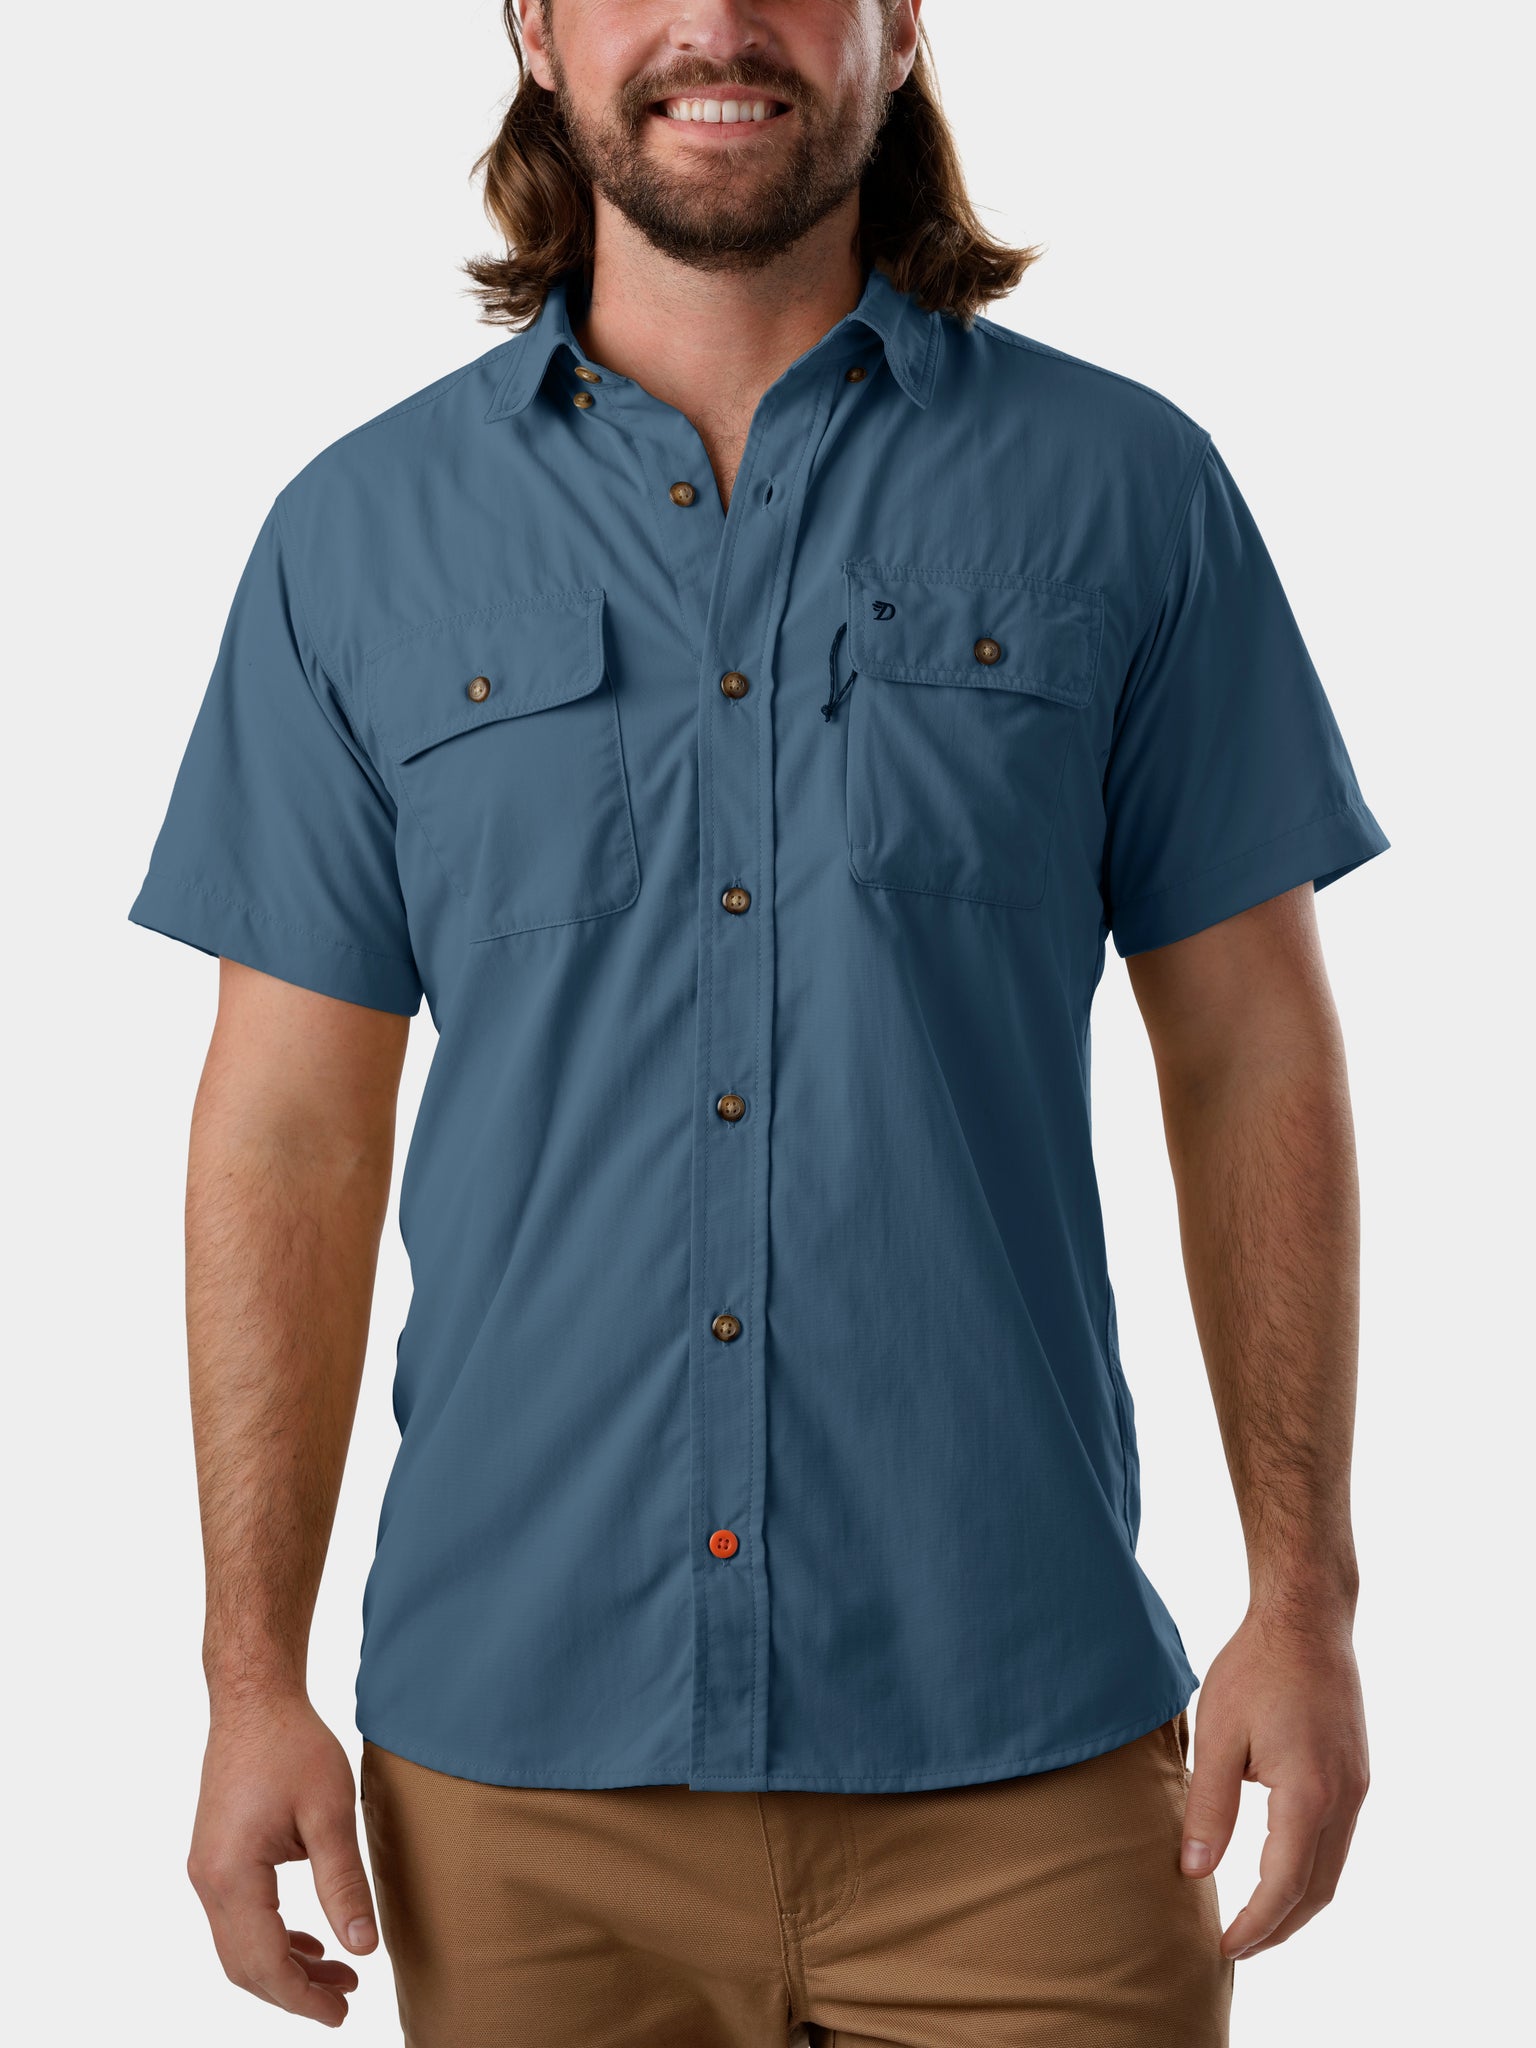 Lightweight Hunting Shirt Short Sleeve - Channel Blue